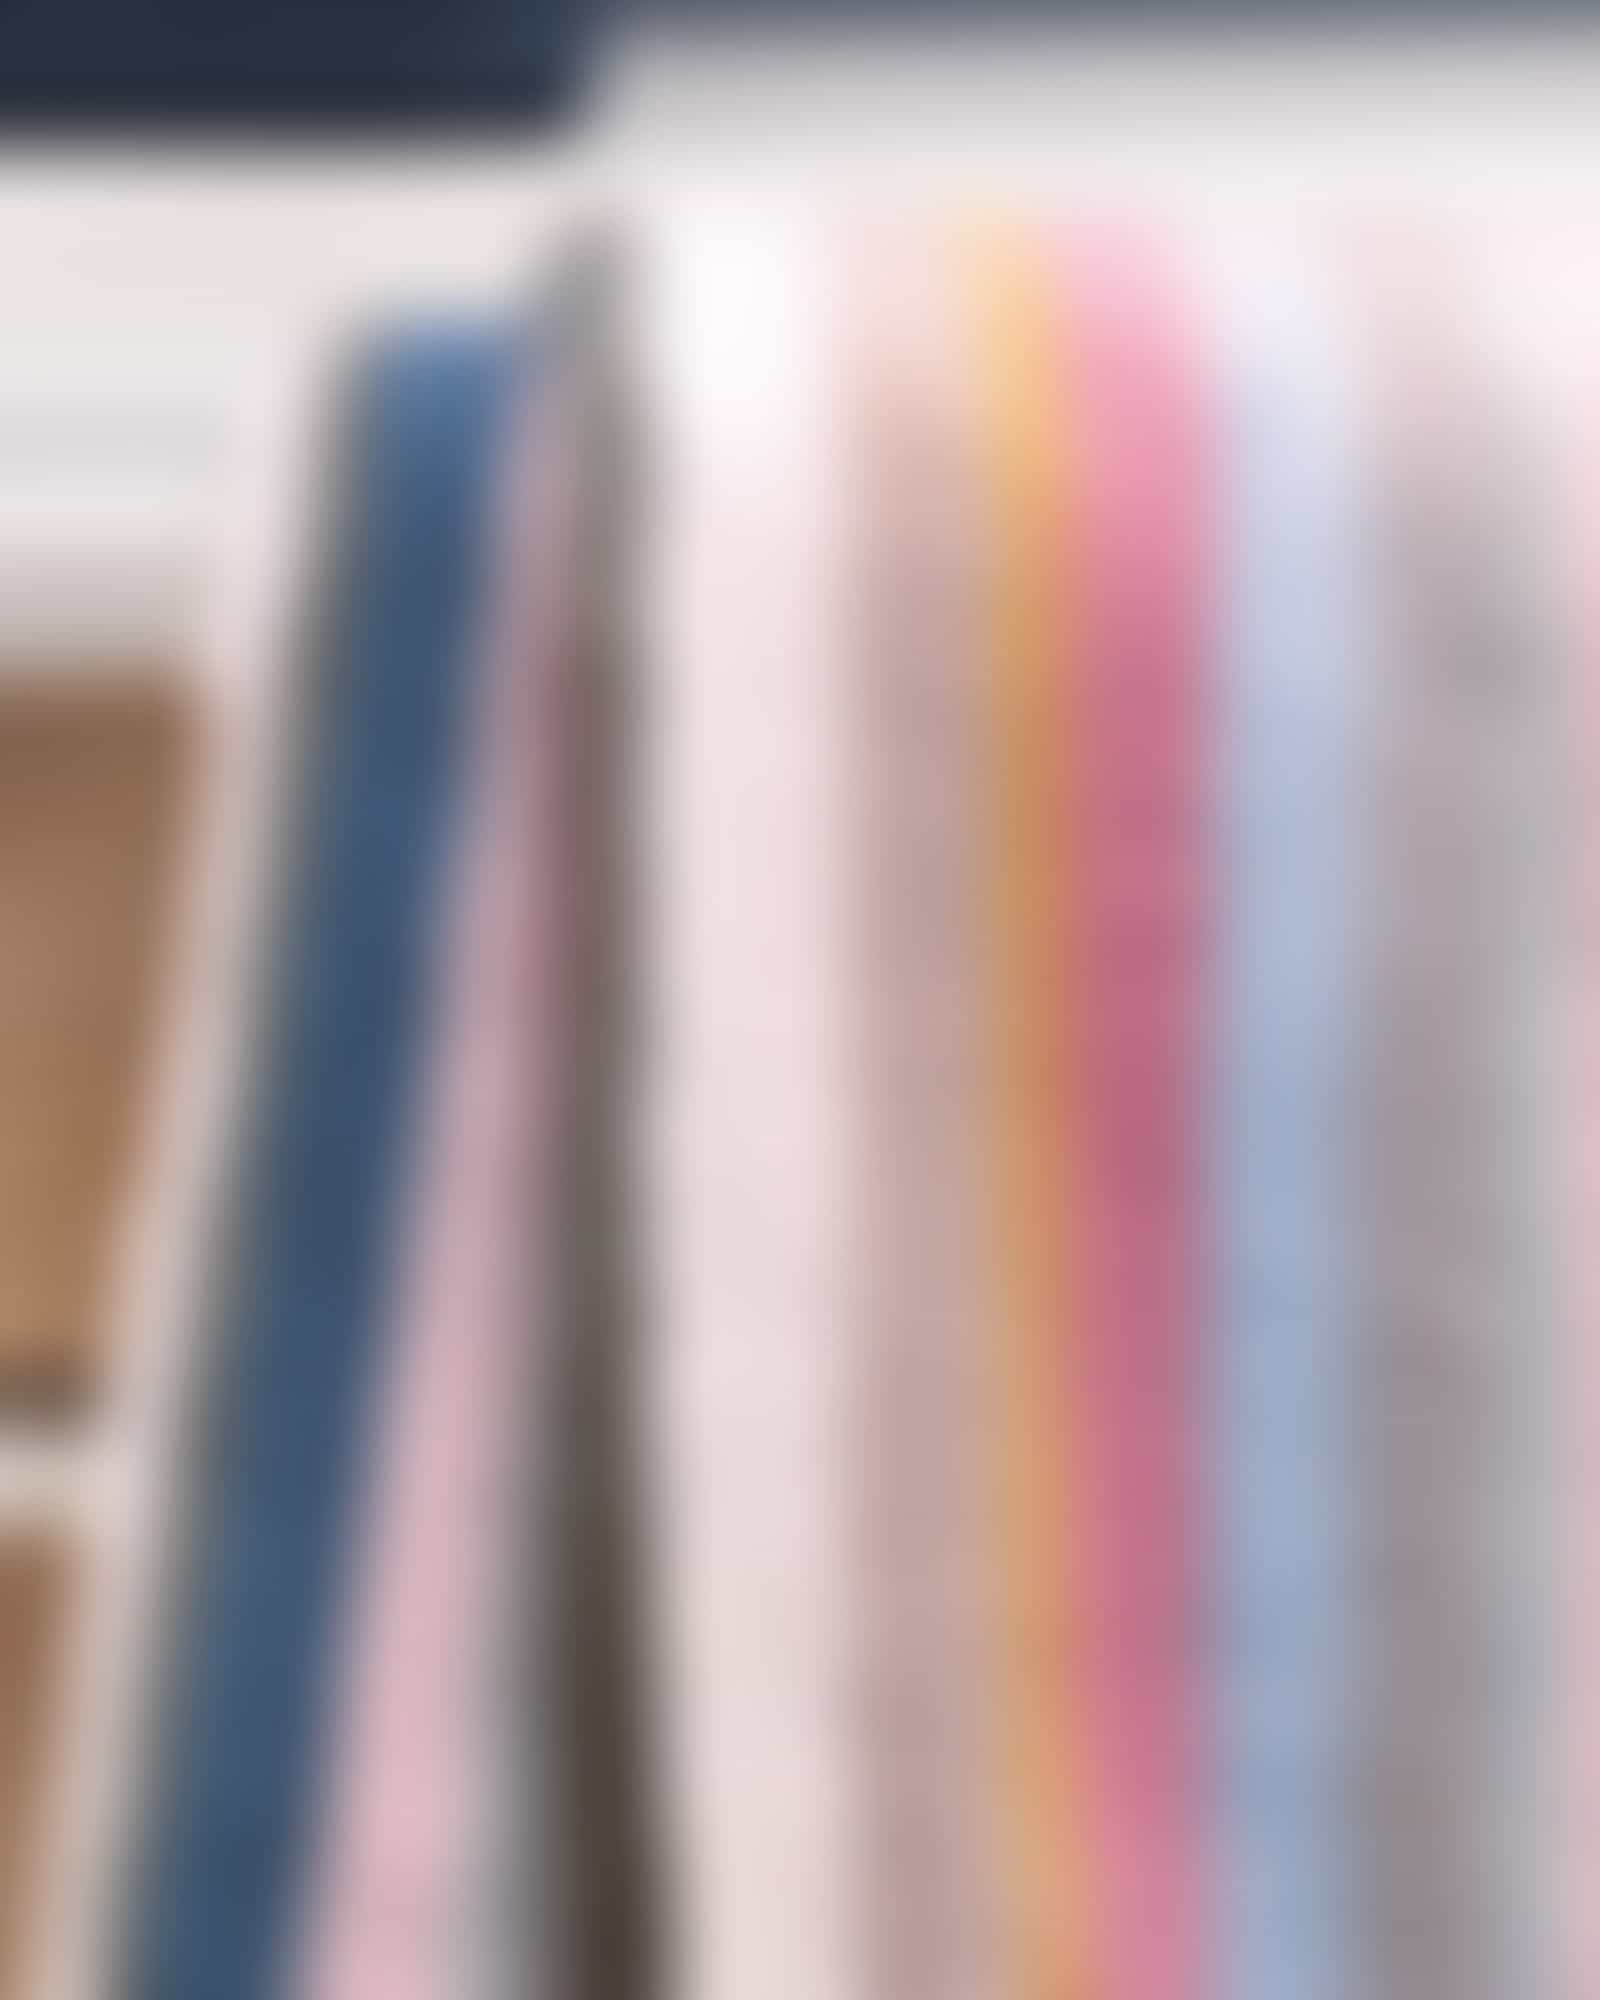 Villeroy & Boch Handtücher Coordinates Stripes 2551 - Farbe: multicolor - 12 - Handtuch 50x100 cm Detailbild 2